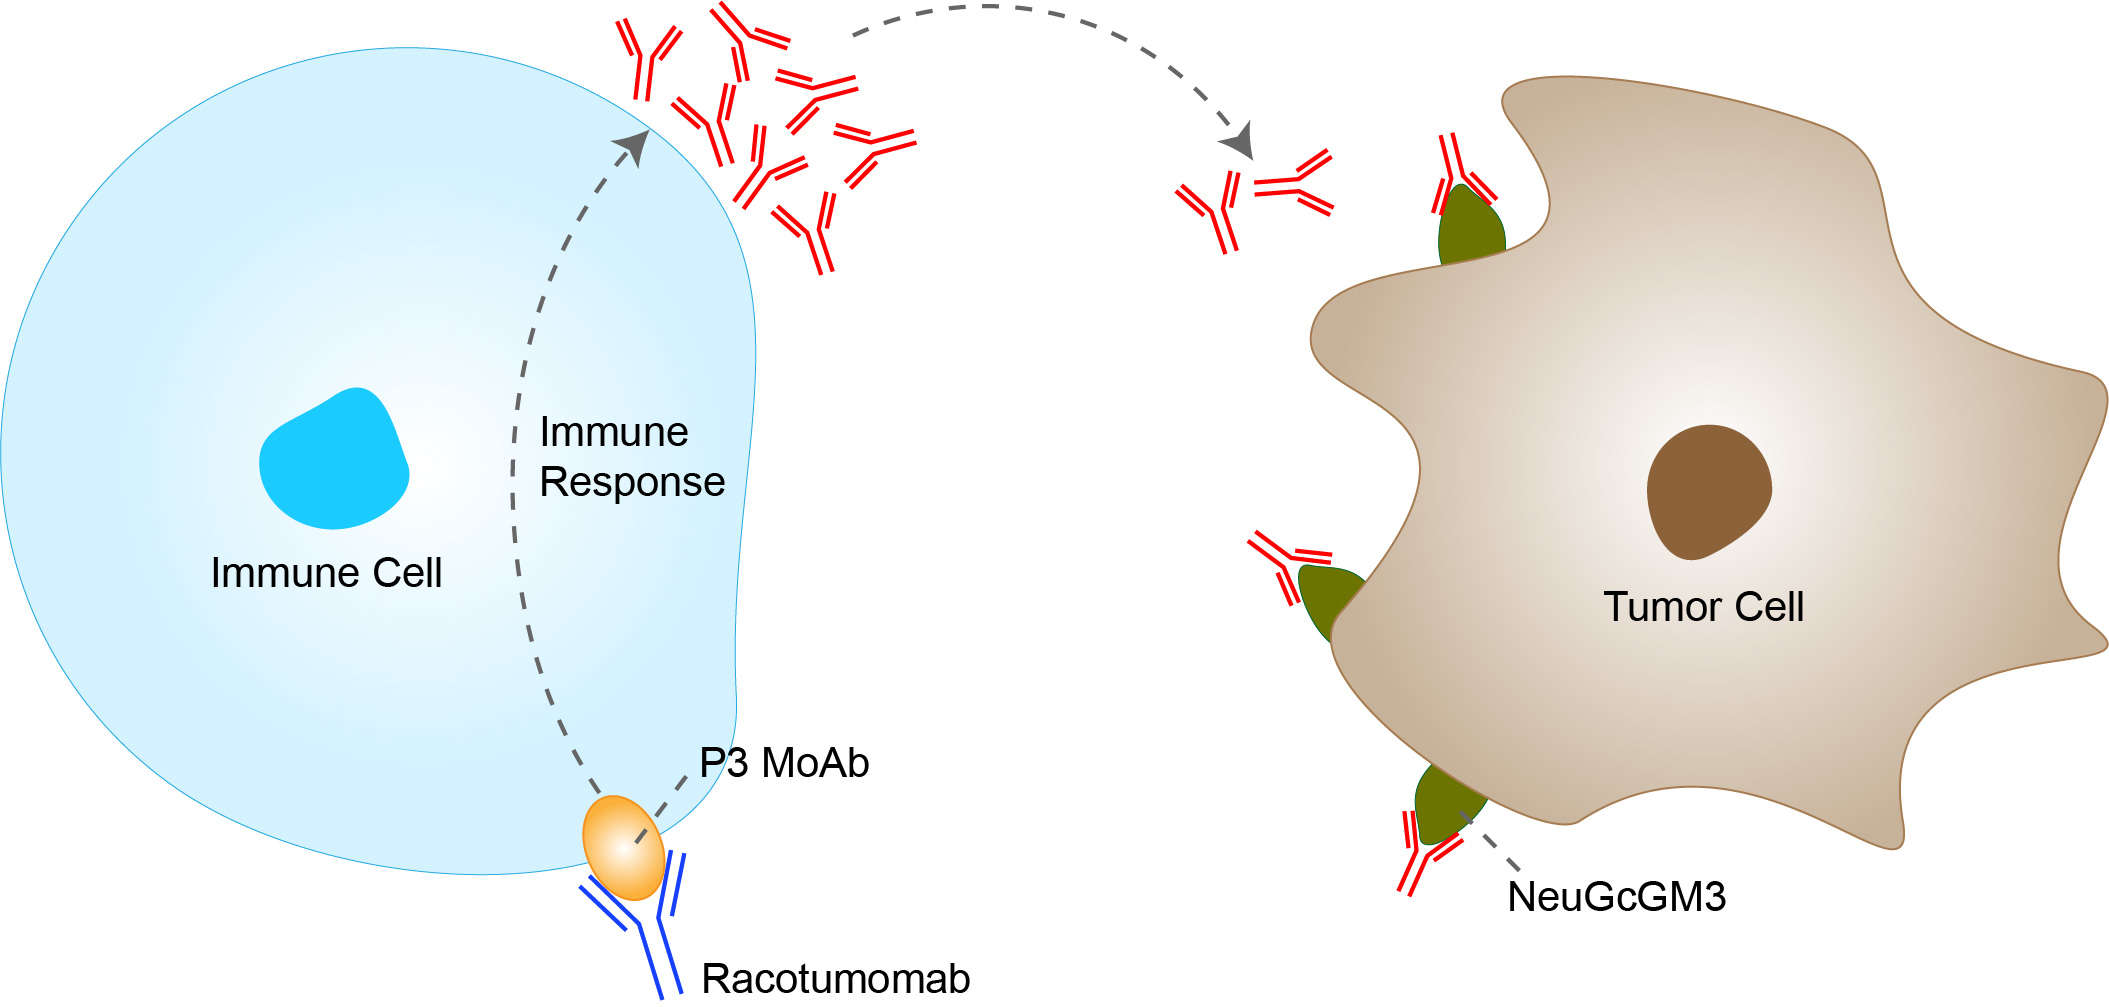 Mechanism of action of Racotumomab